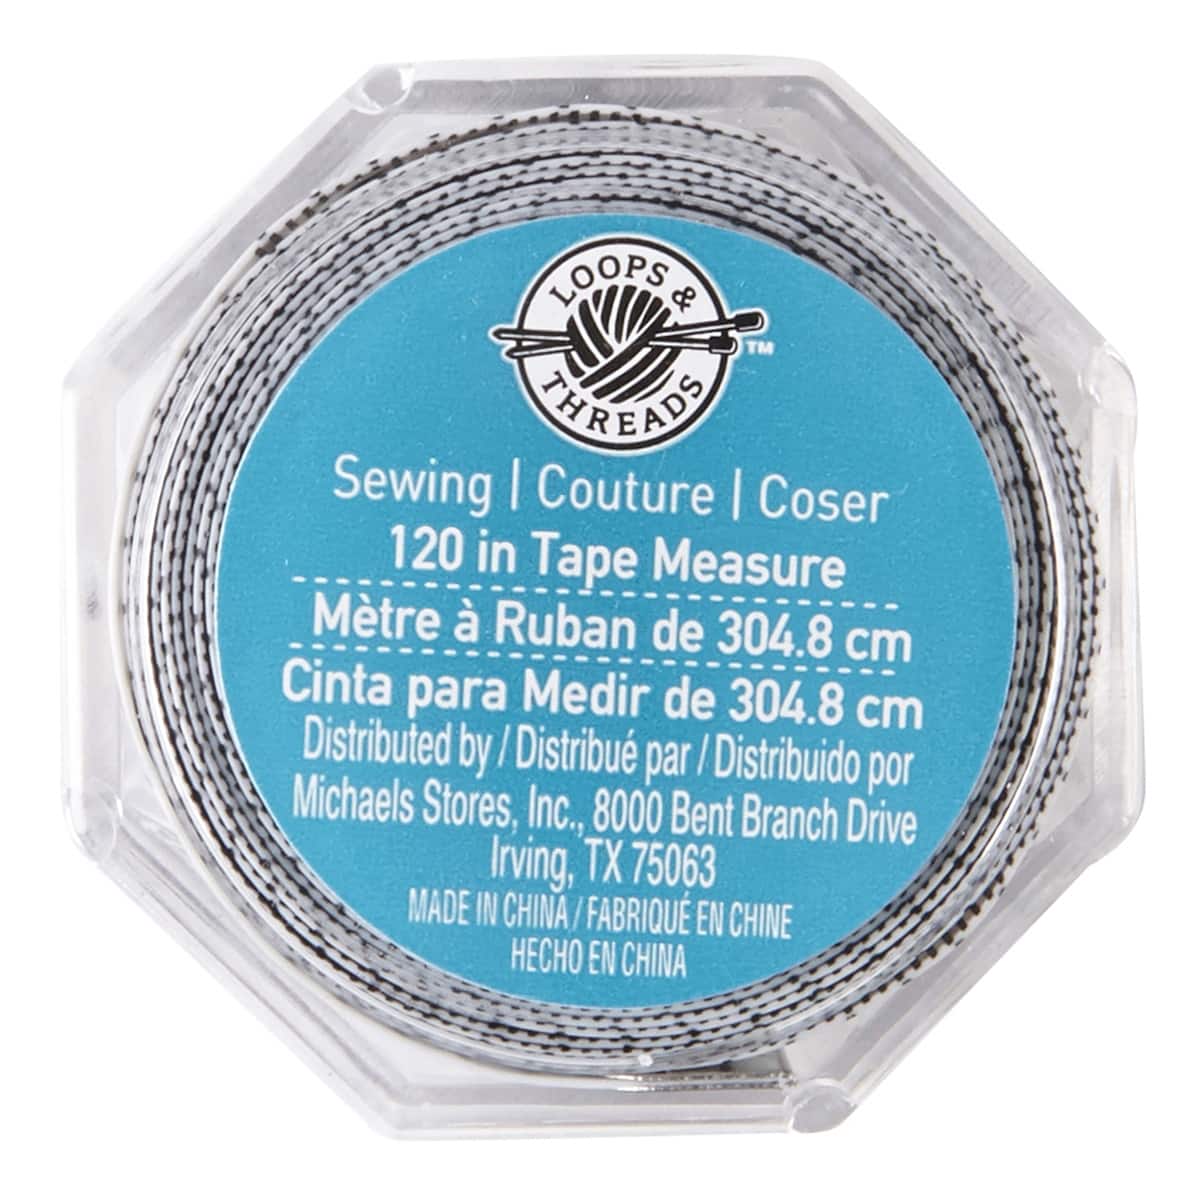 Loops & Threads™ Tape Measure, 60